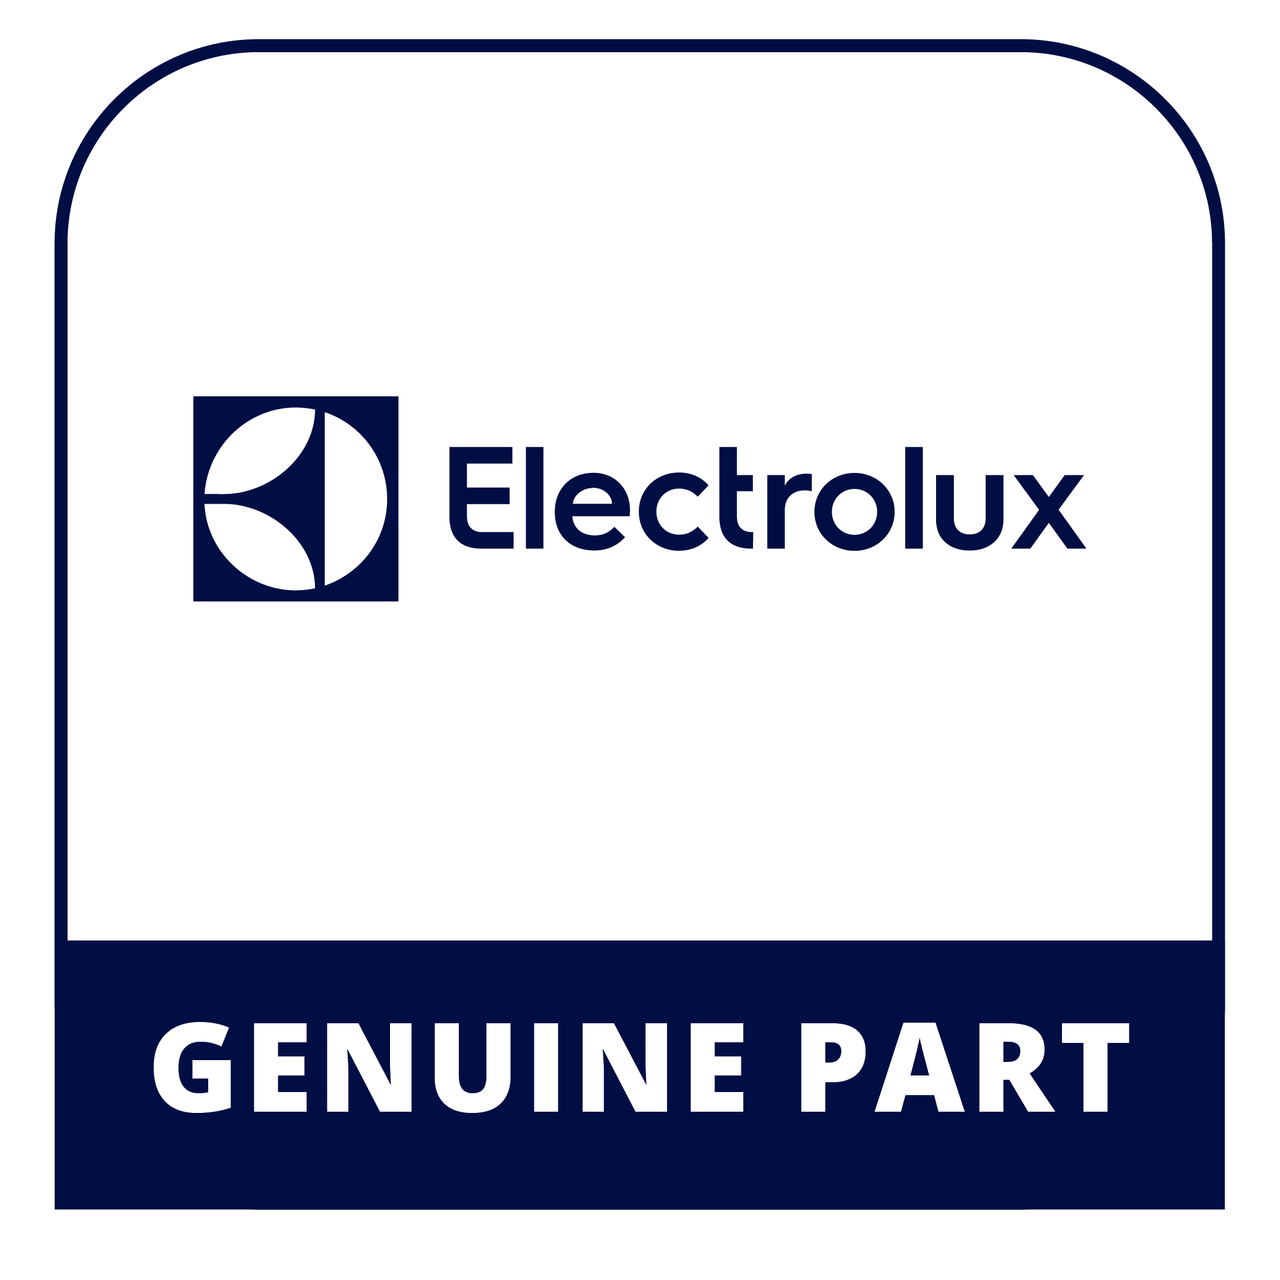 Frigidaire - Electrolux 318221301 Ignitor/Orifice Ass - Genuine Electrolux Part